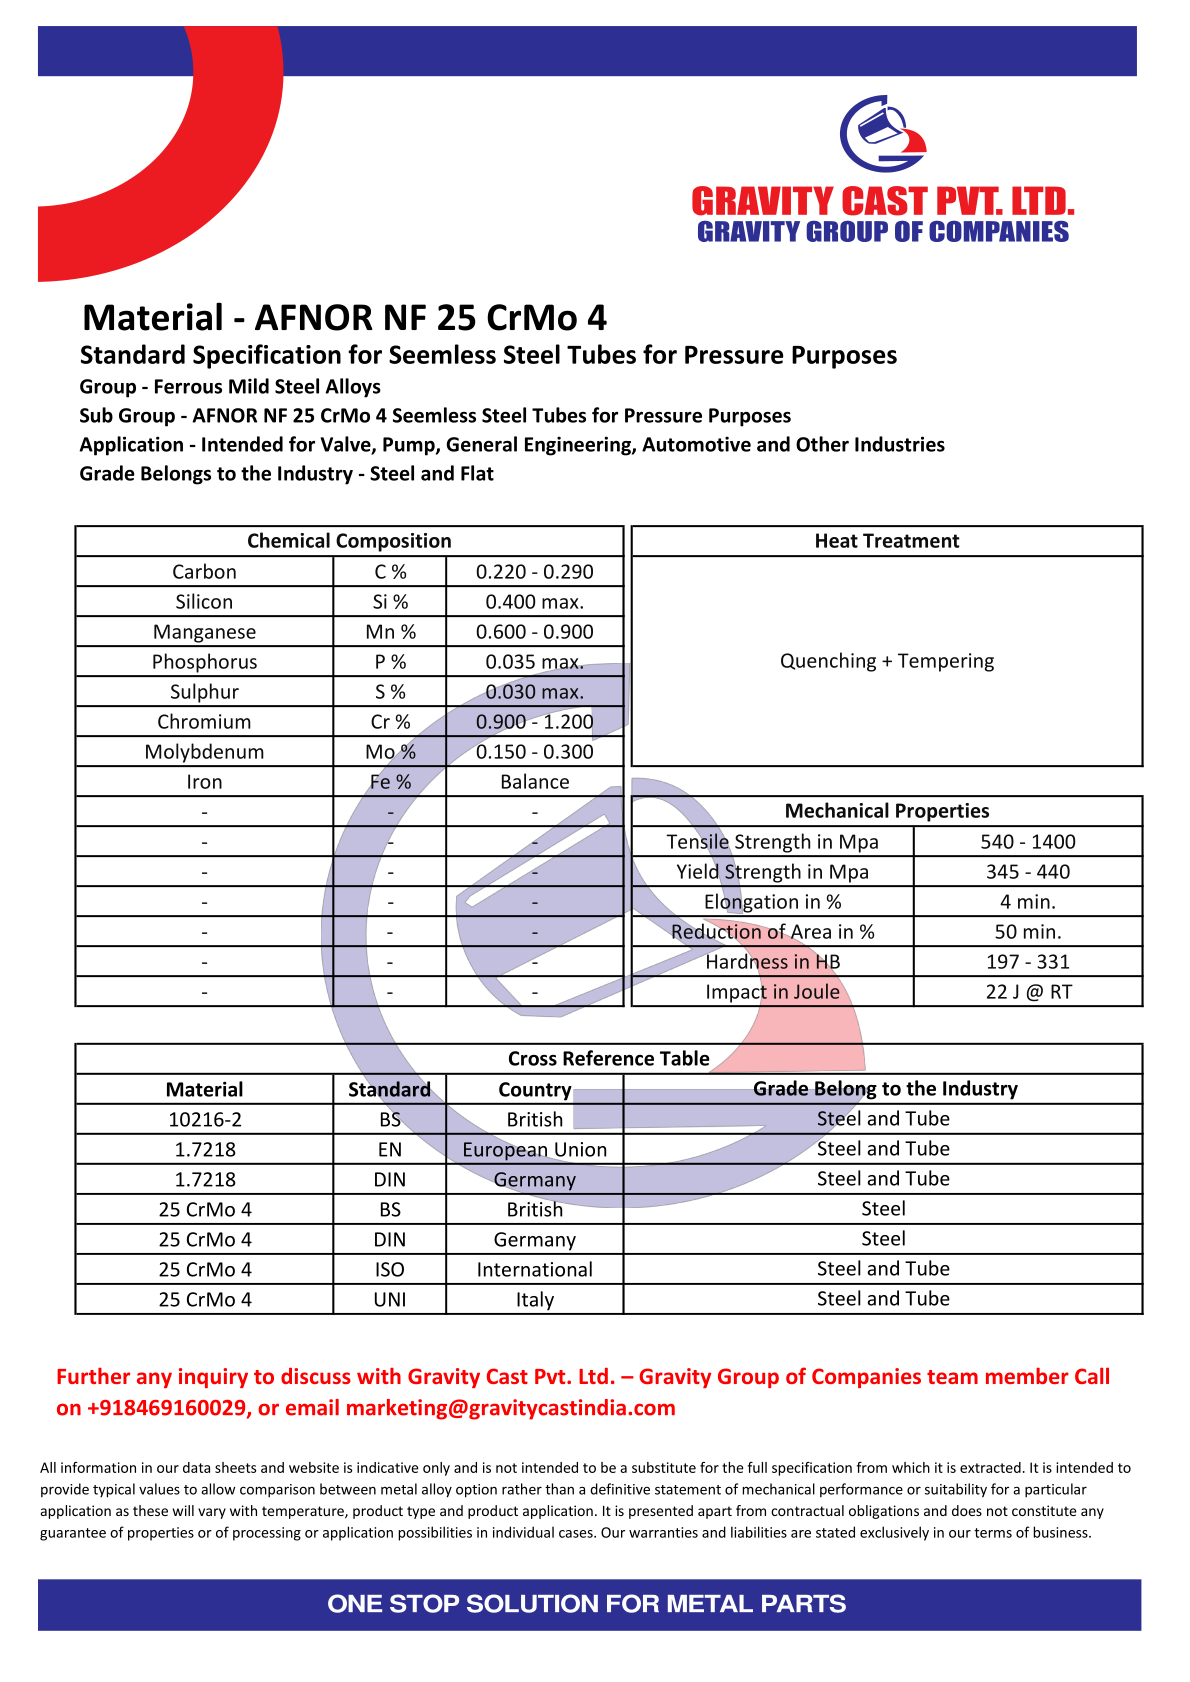 AFNOR NF 25 CrMo 4.pdf